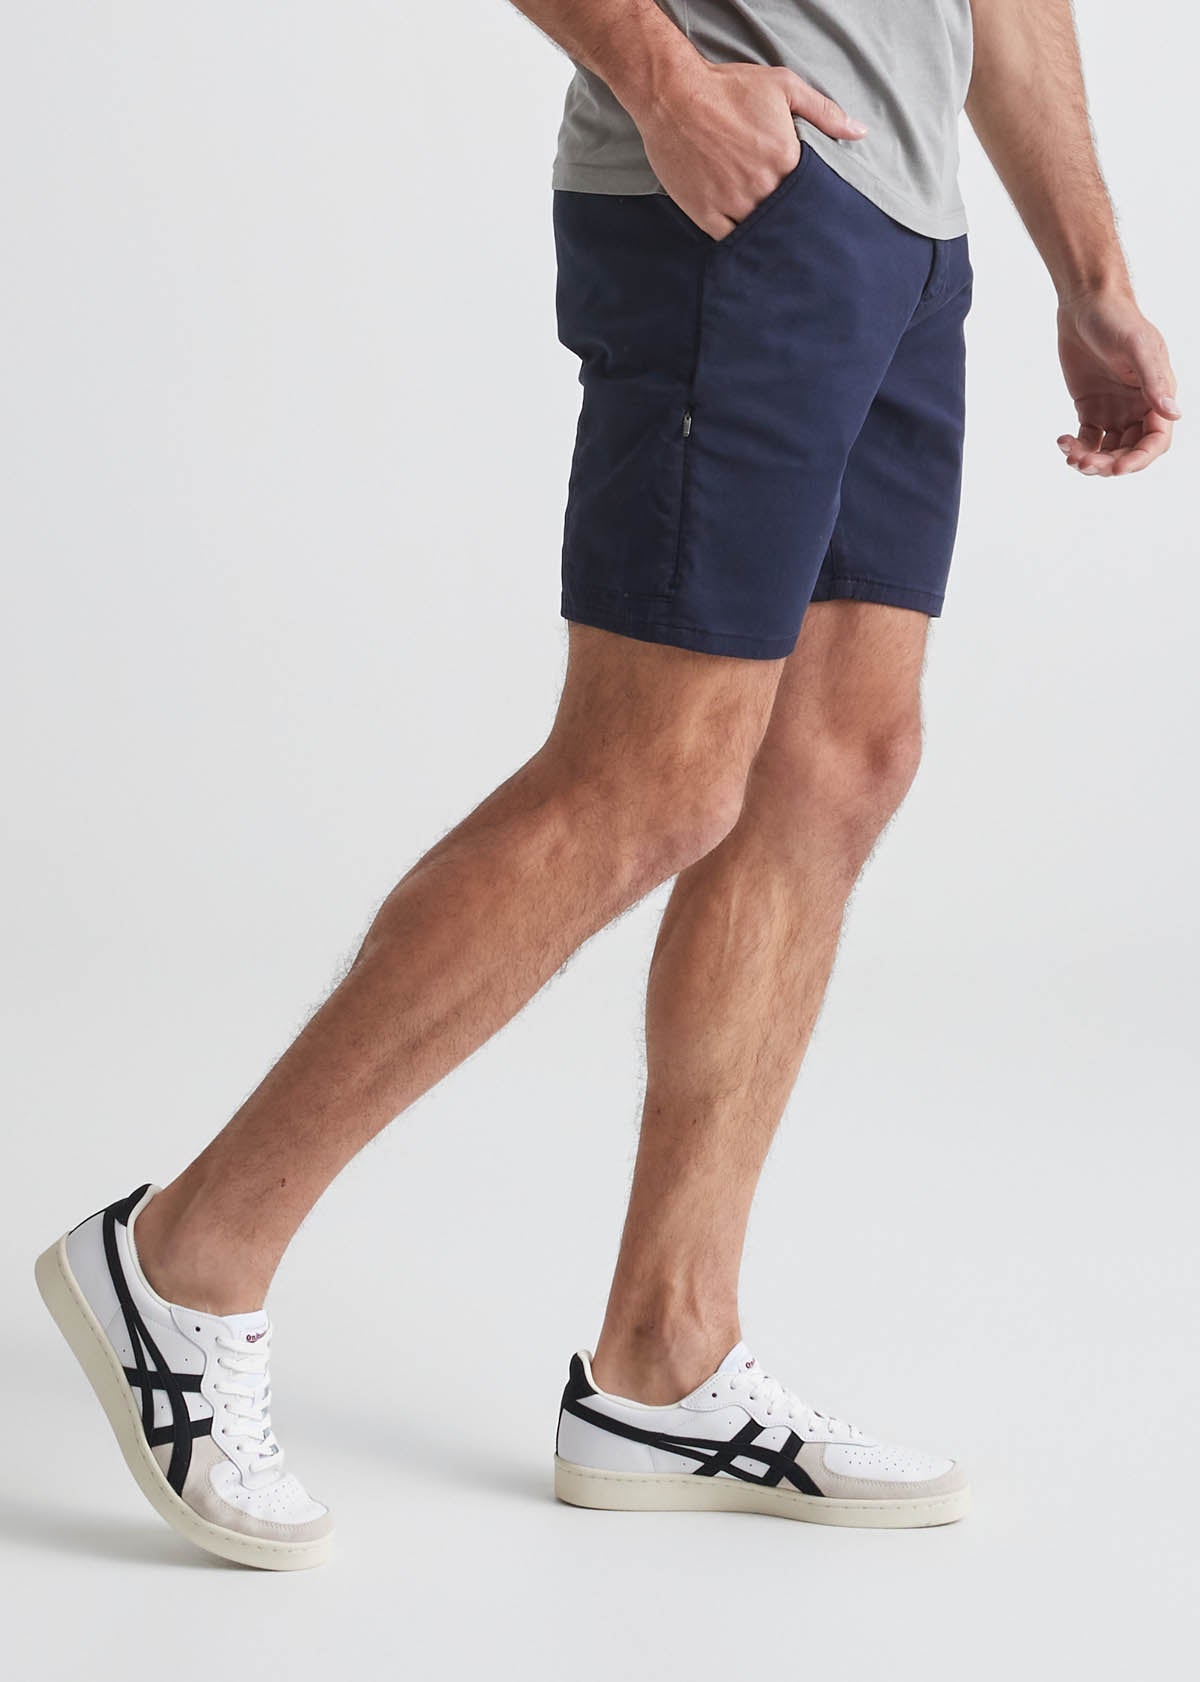 Men's Lightweight Shorts Slim Fit